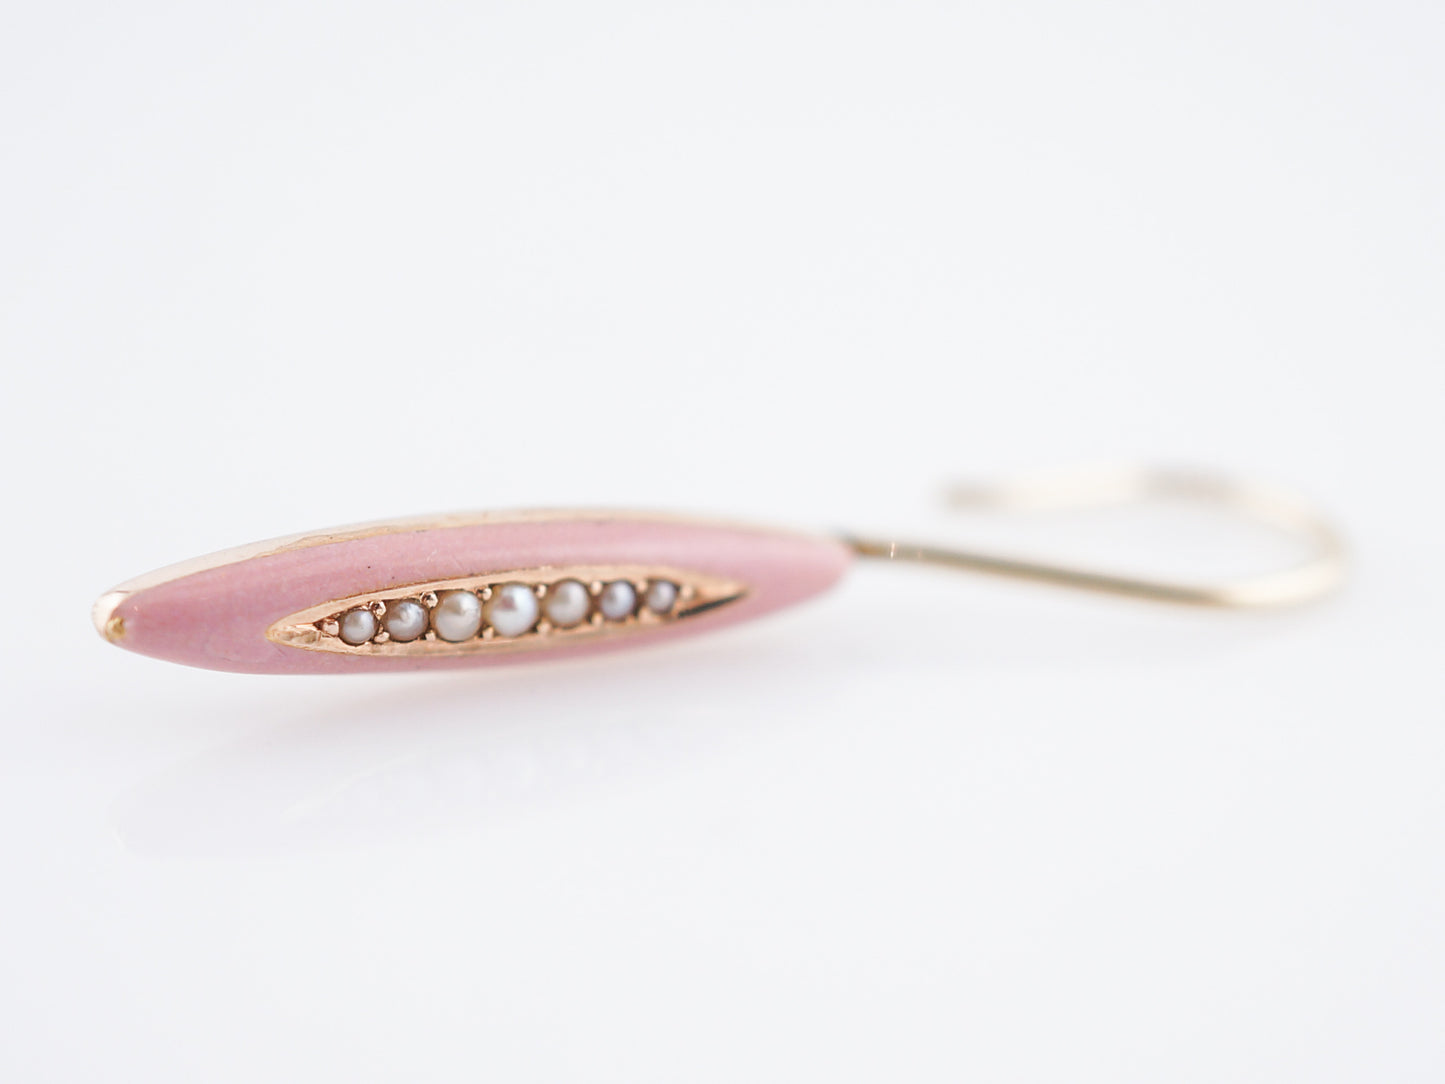 Antique Earrings Victorian Pink Enamel & Seed Pearls in 14k Yellow Gold